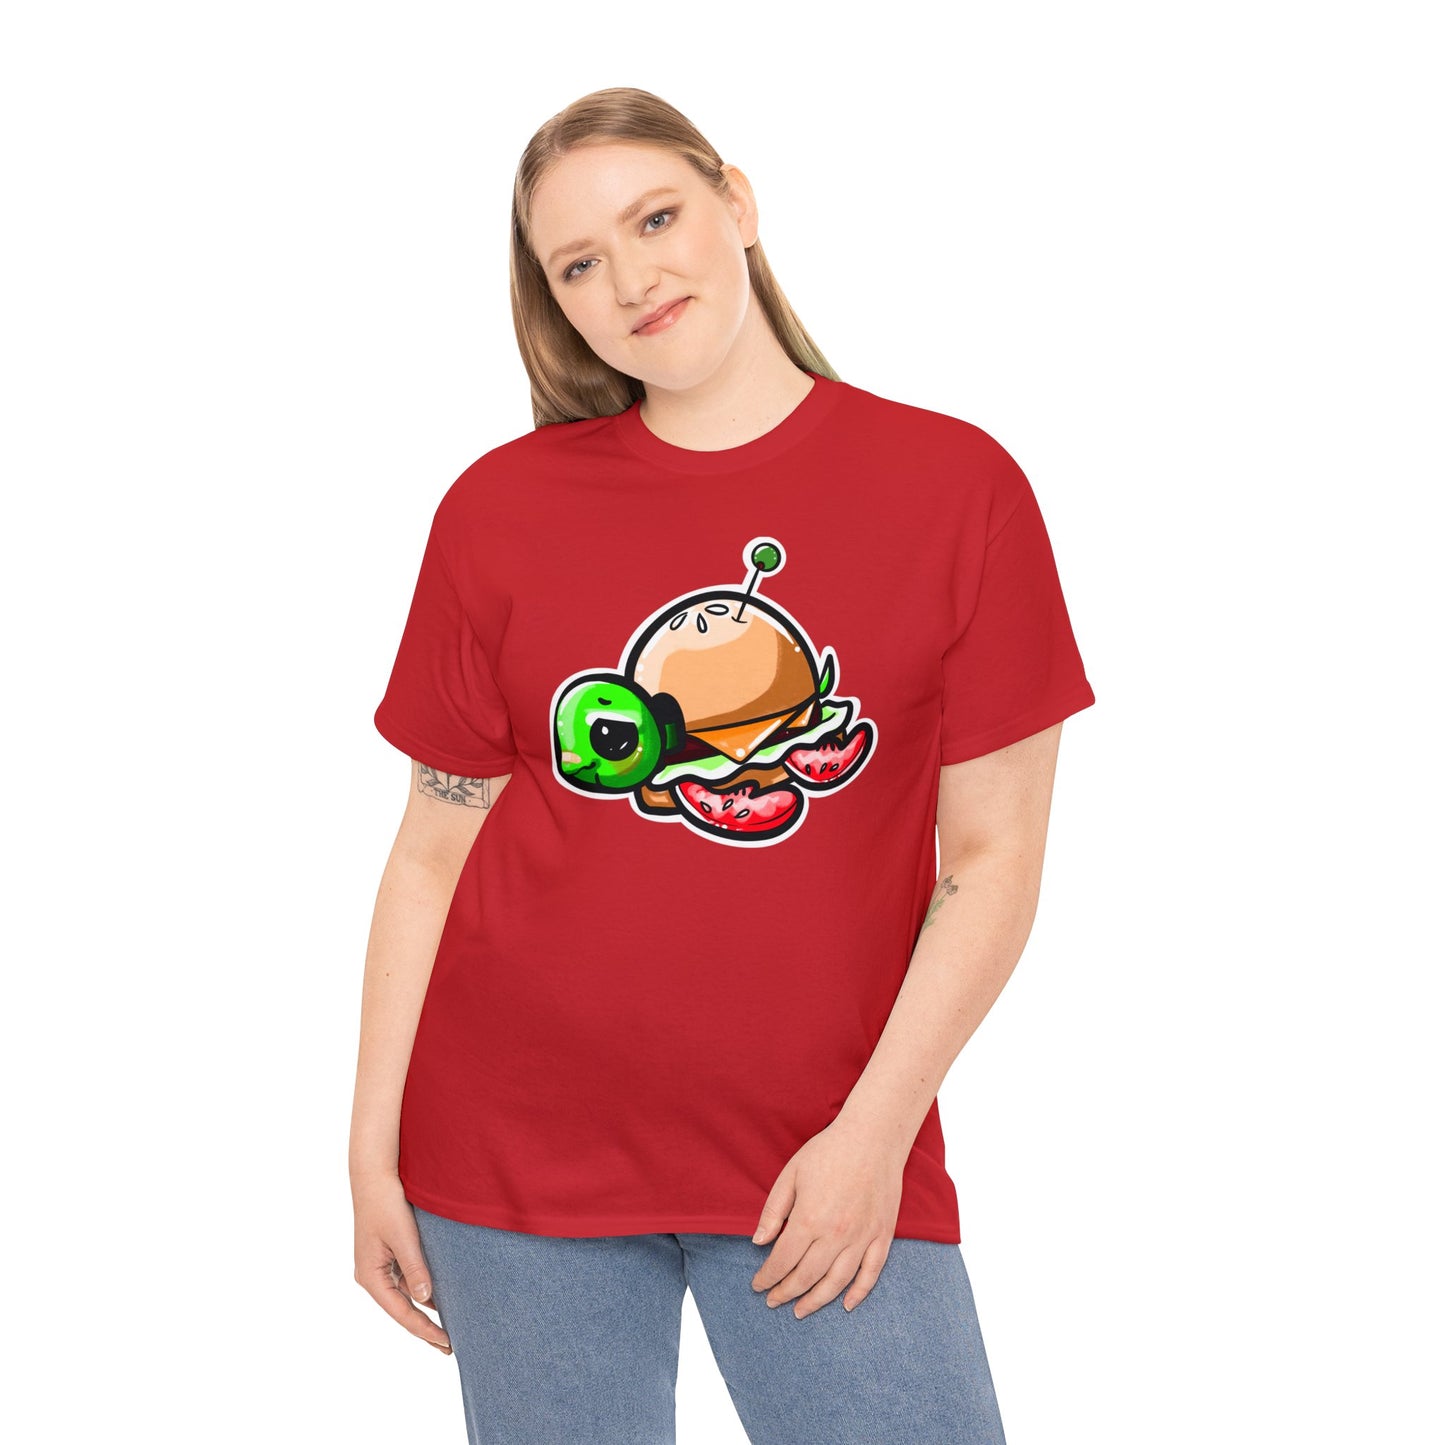 Tortuga Burguer / Turtle Burguer Tshirt